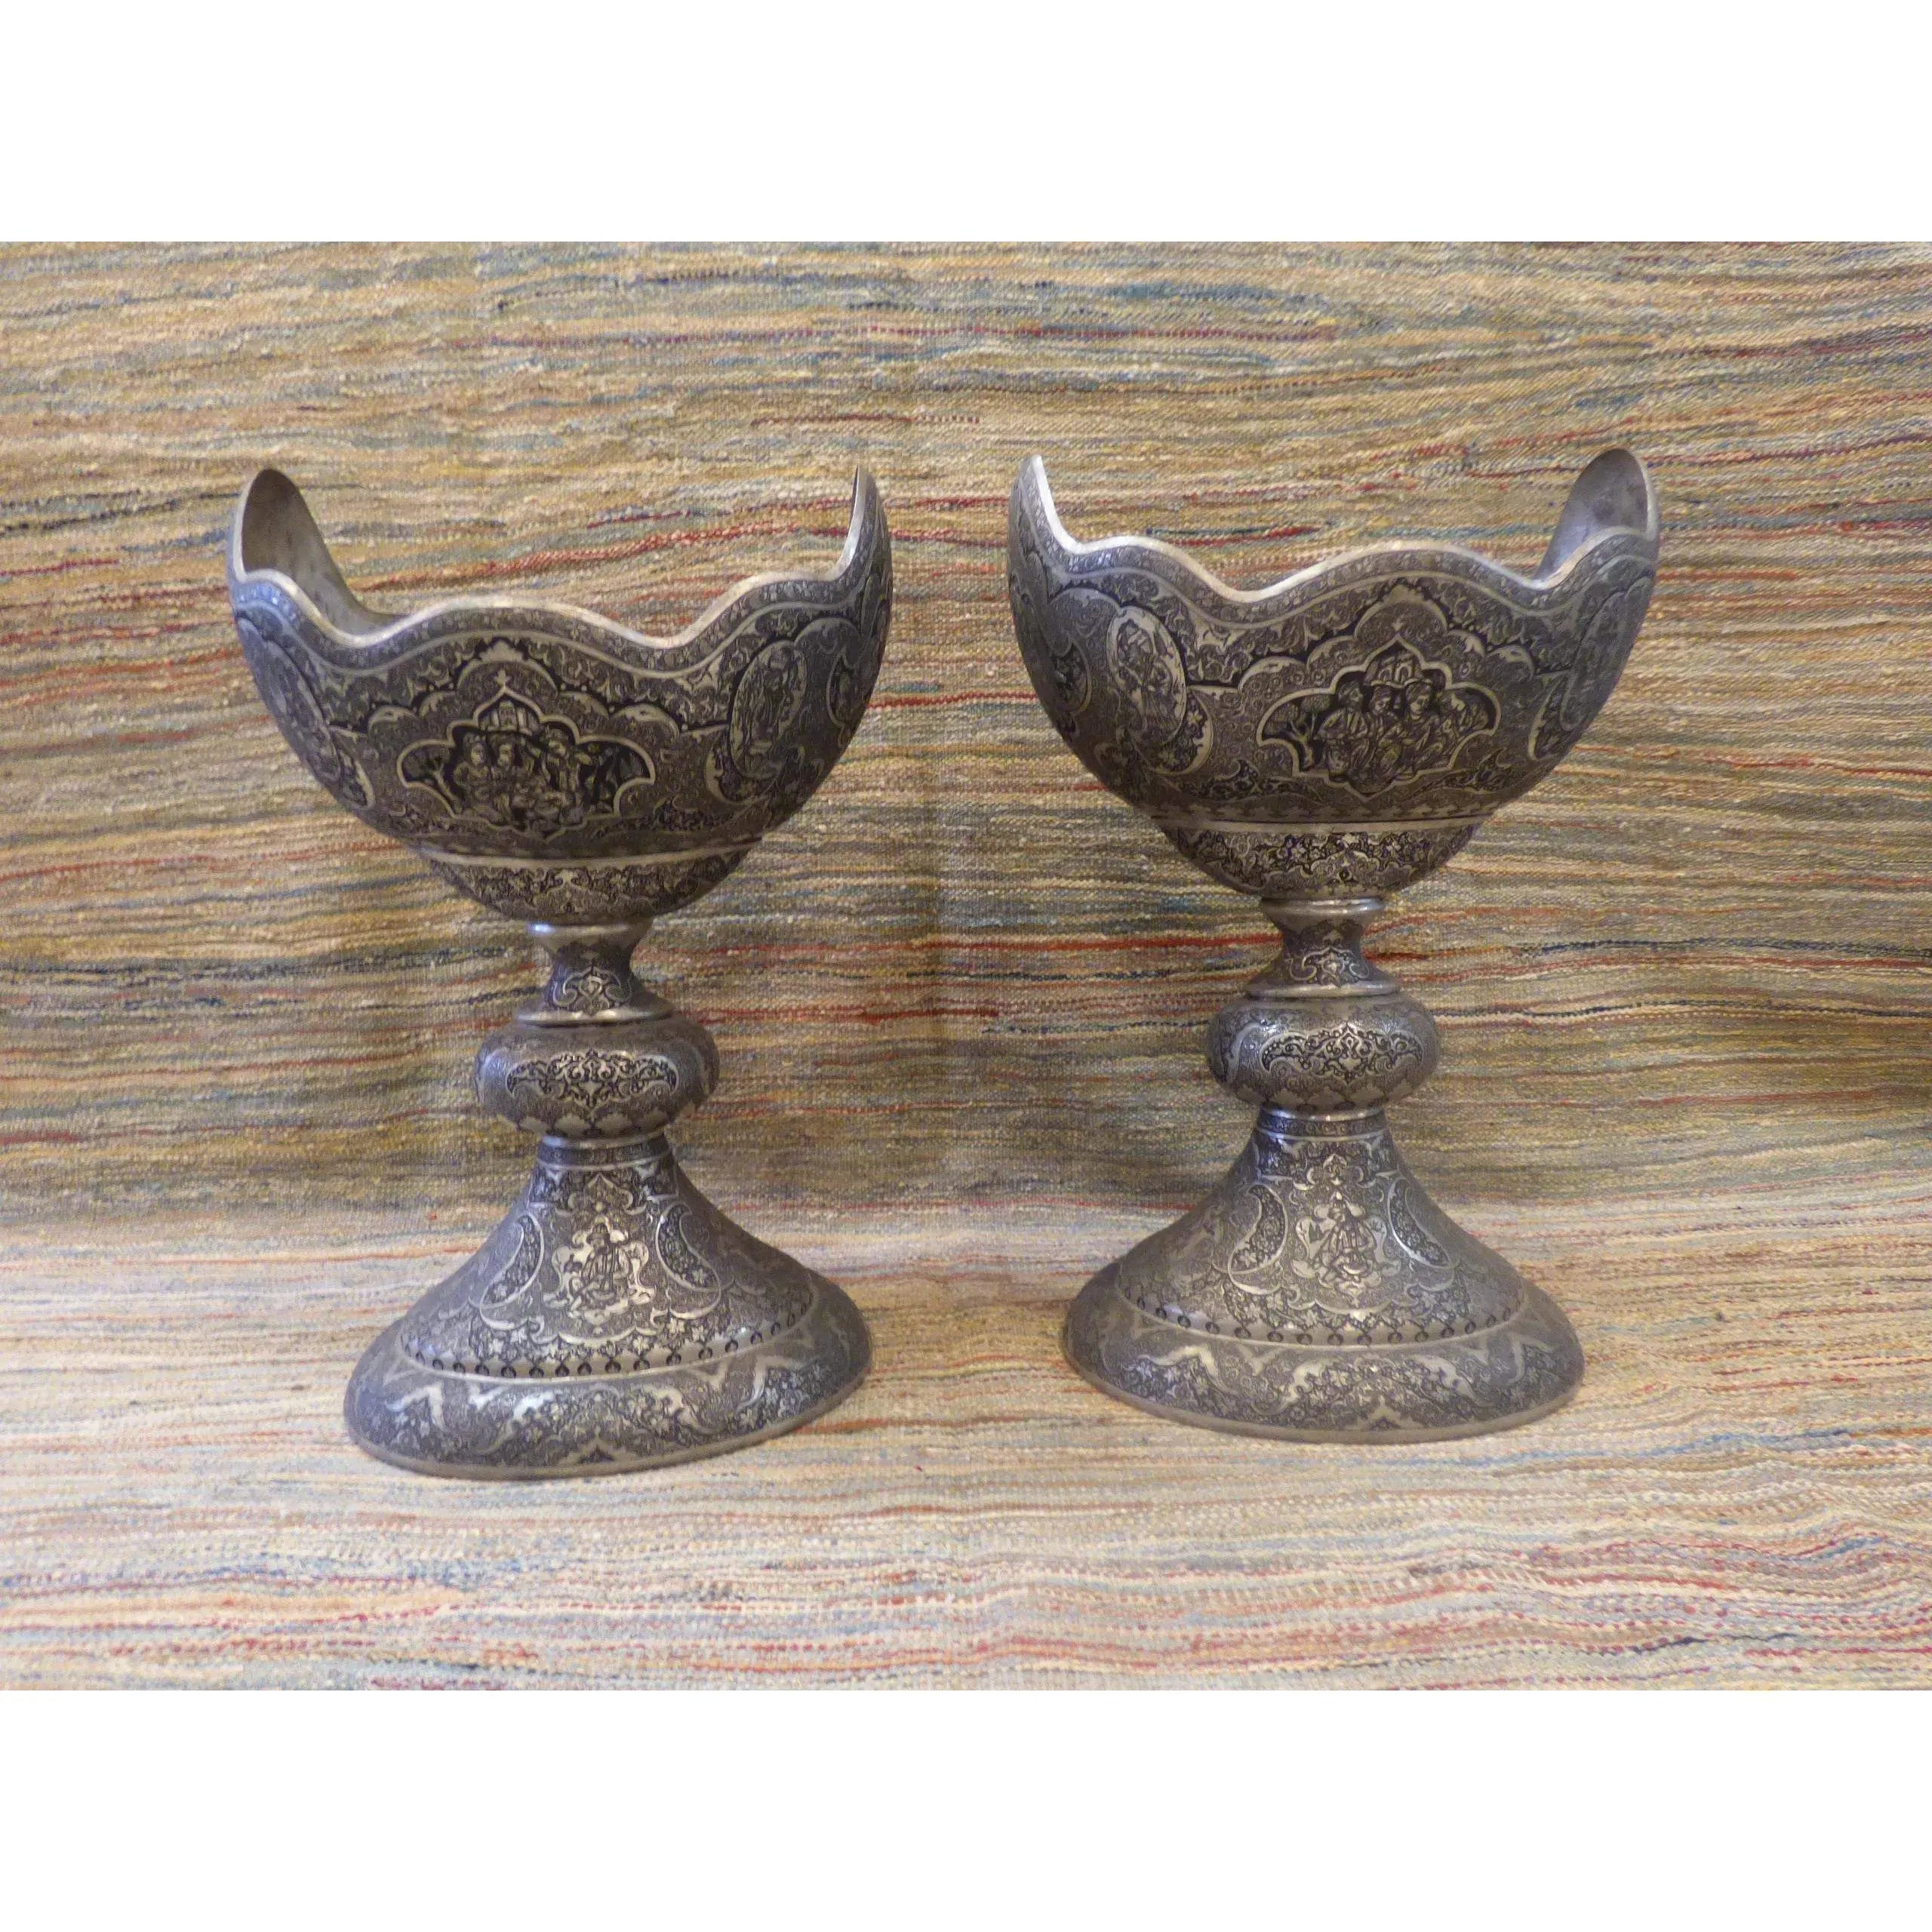 Authentic Art Antique Persian Engraved Brass Vase Ghalamzani 16" X 25" Abcca0102